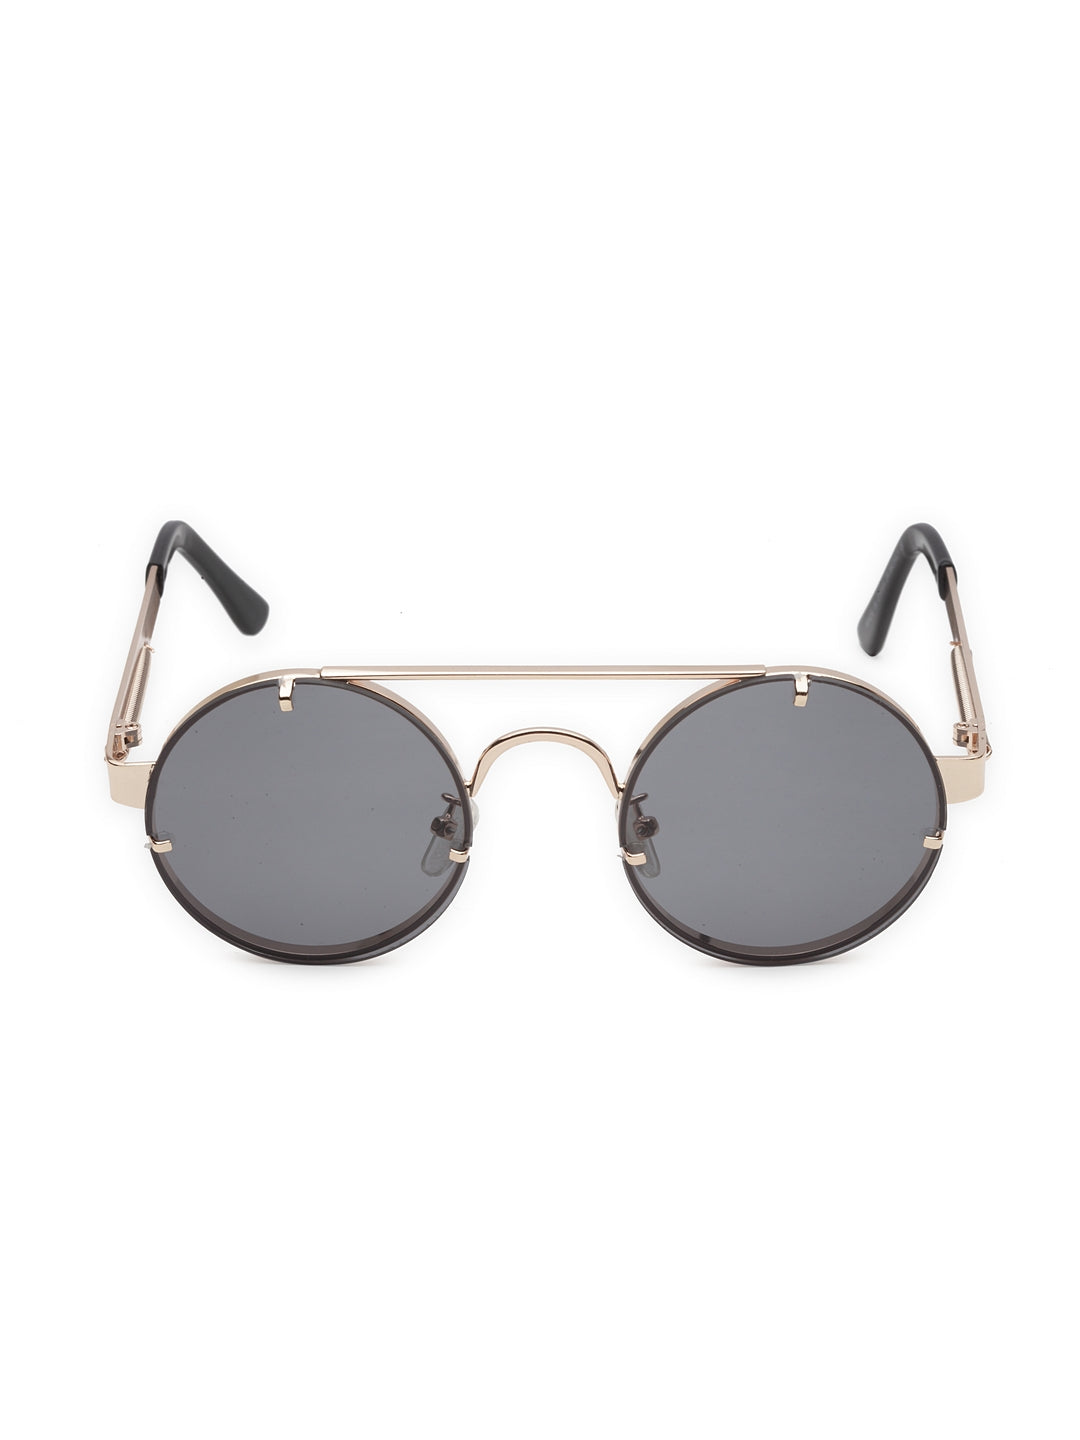 Avant-Garde Paris Fashion Driving Retro Round Polarized Sunglasses